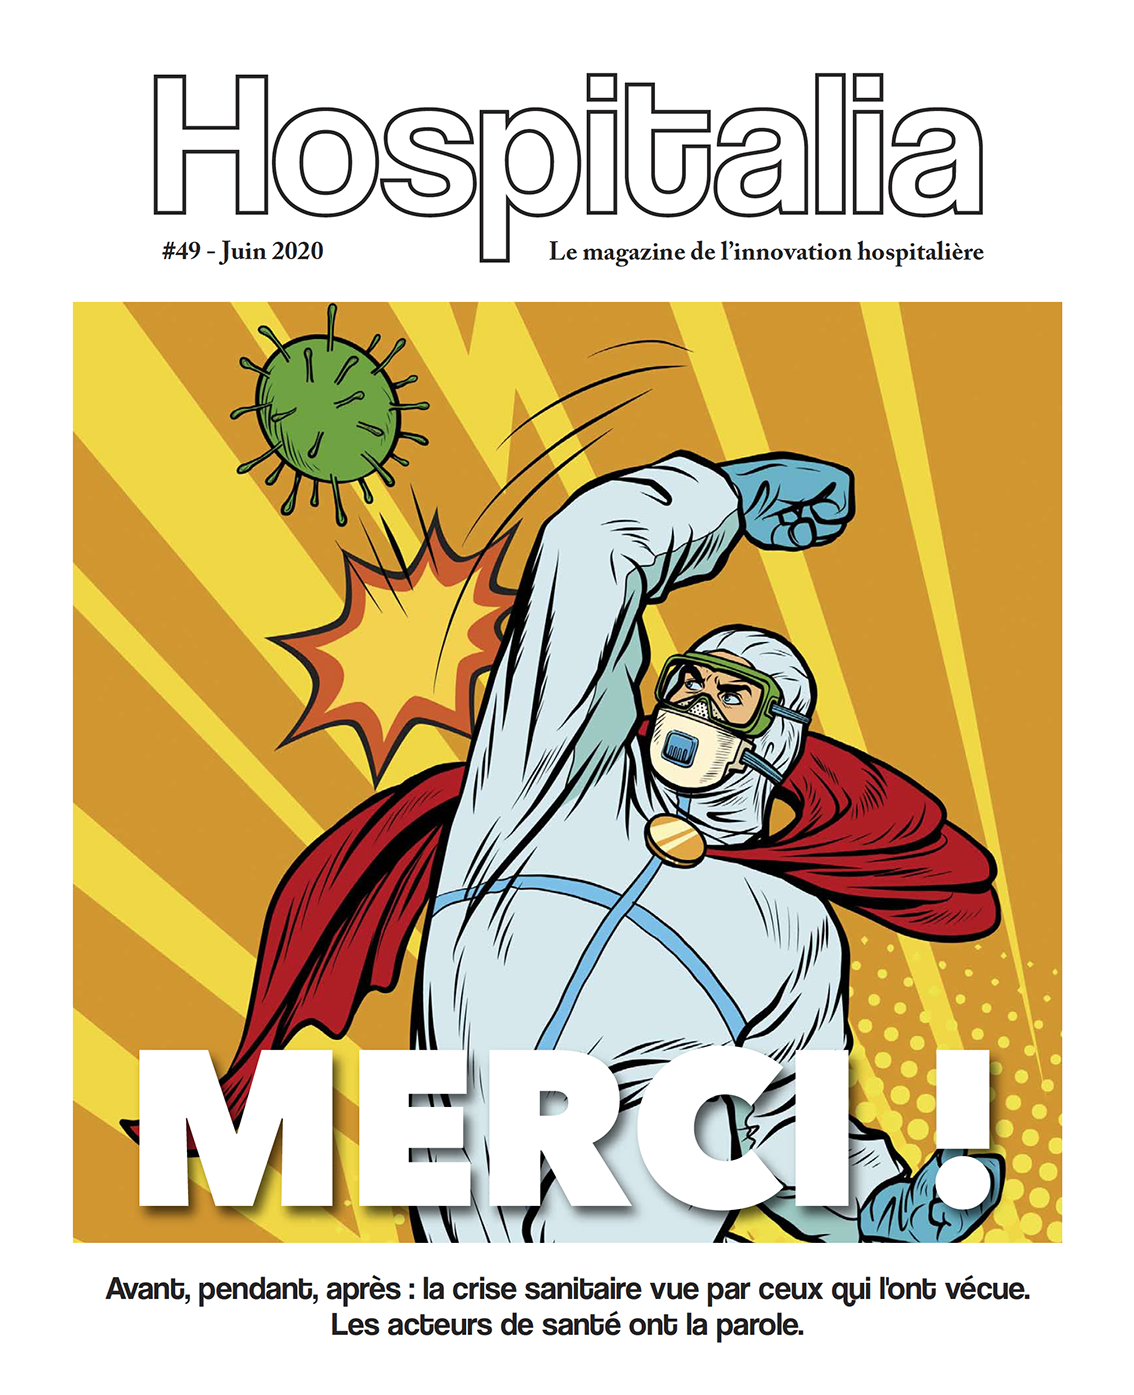 Hospitalia #49 - Spécial Covid-19 : MERCI !